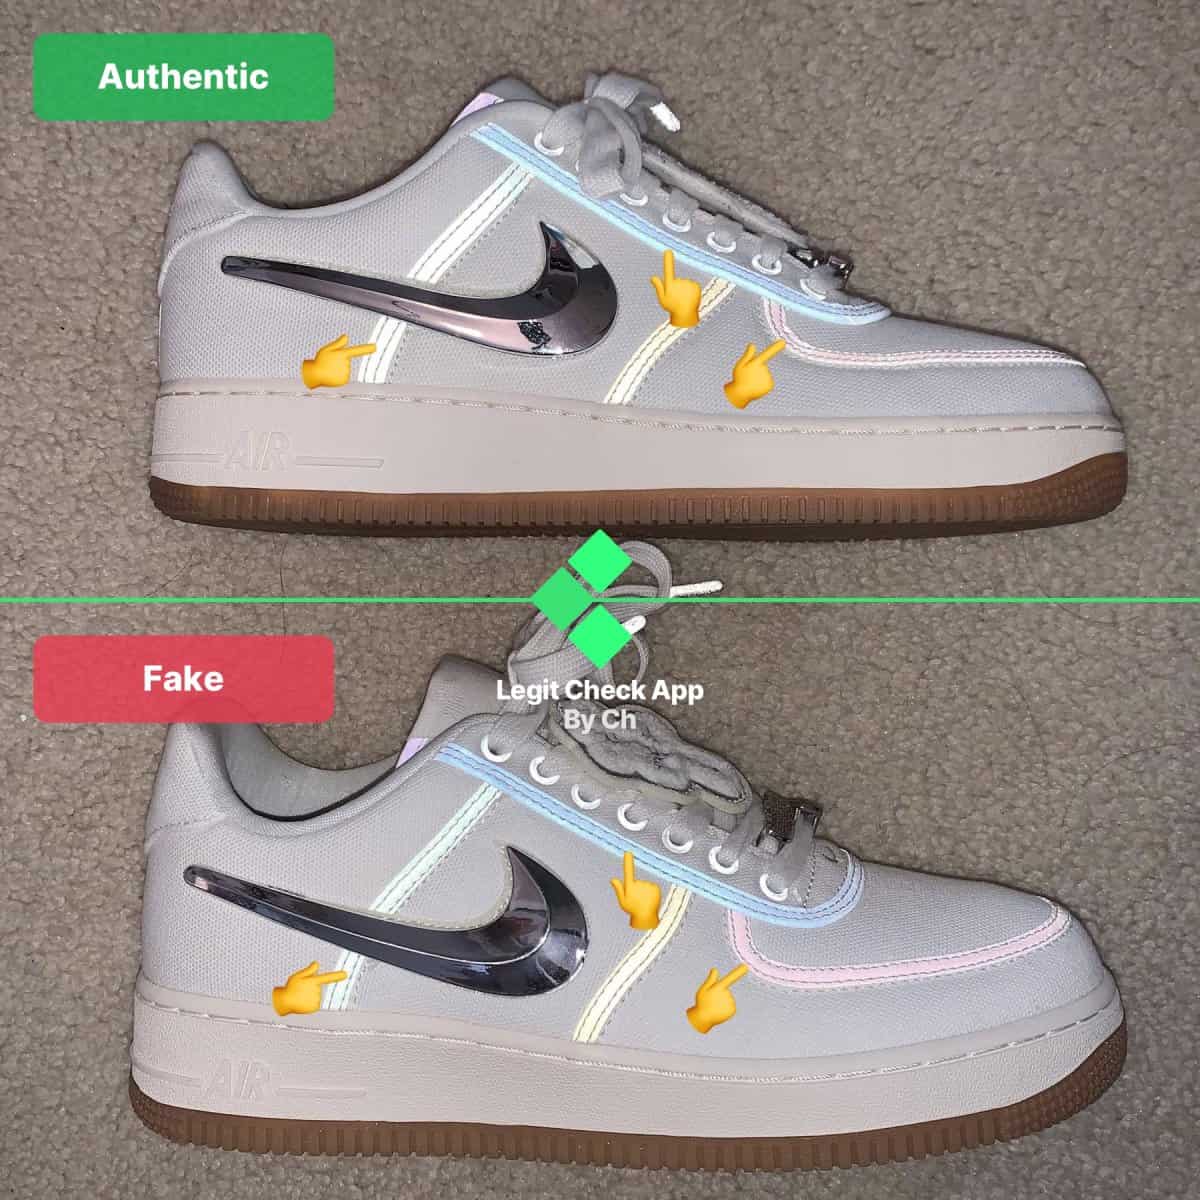 fake vs real travis scott shoes